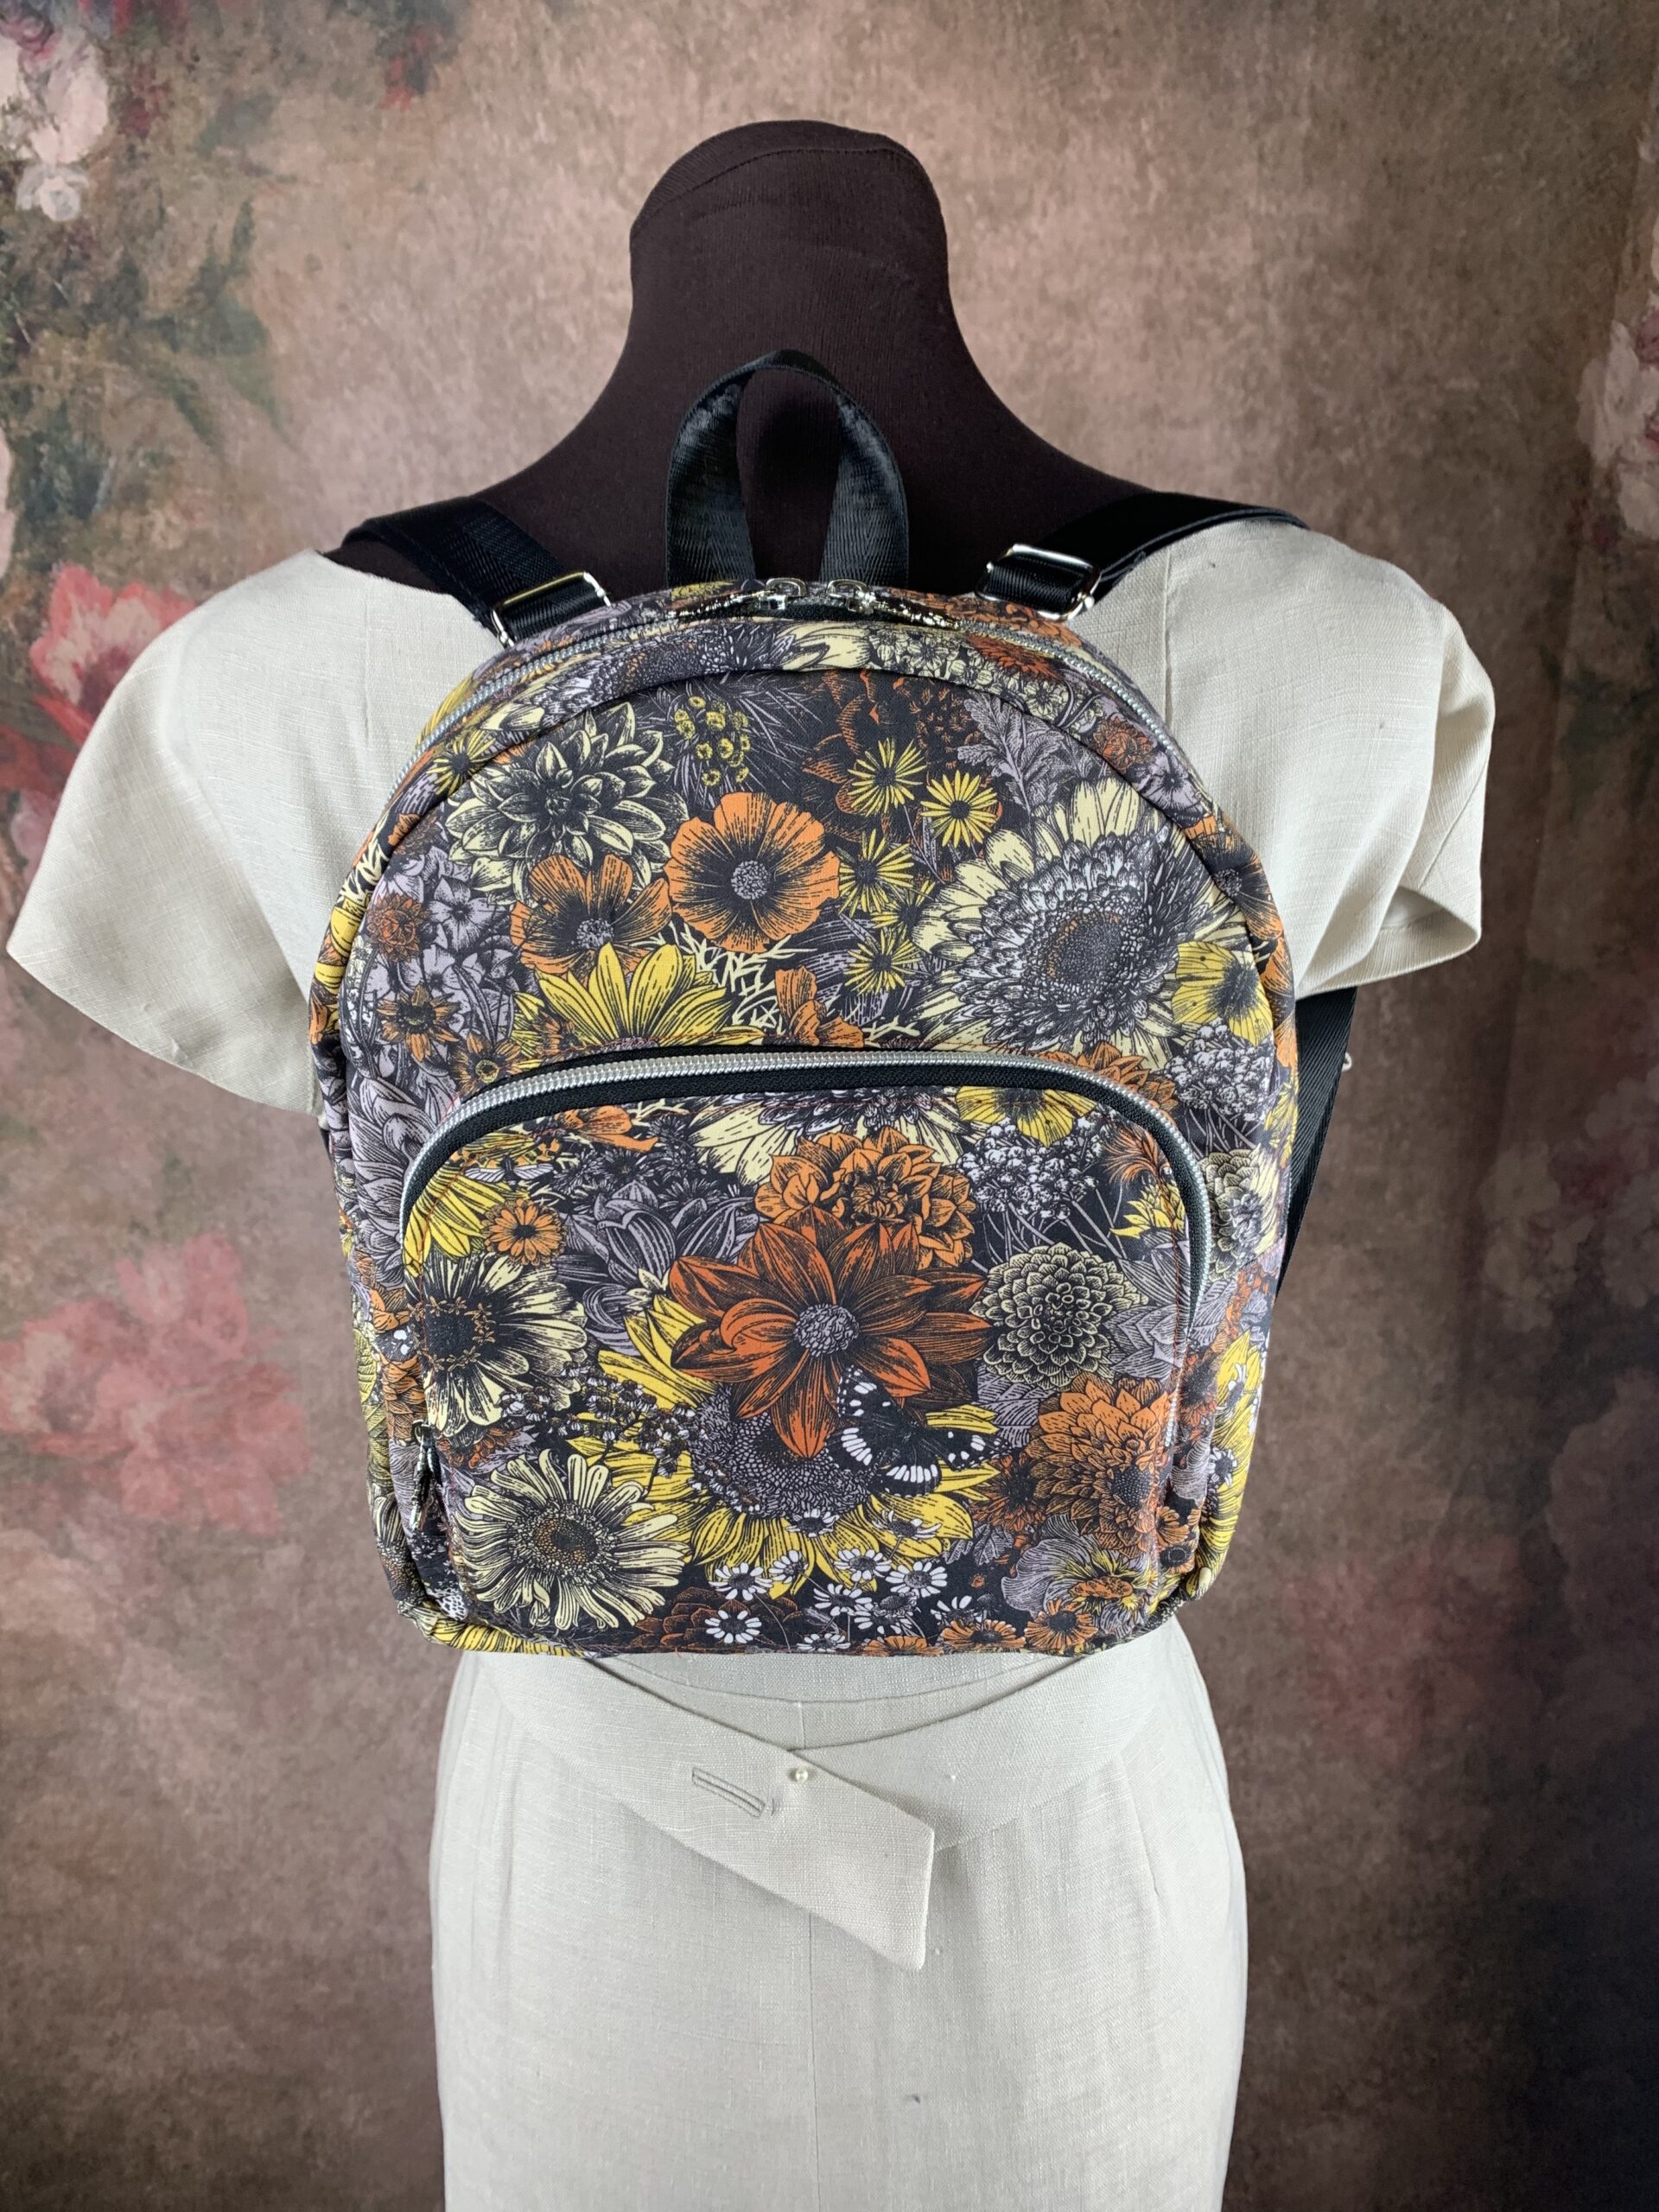 Sunflower, yellow, orange flowers on backpack. Handmade by "Lex & Pickles"